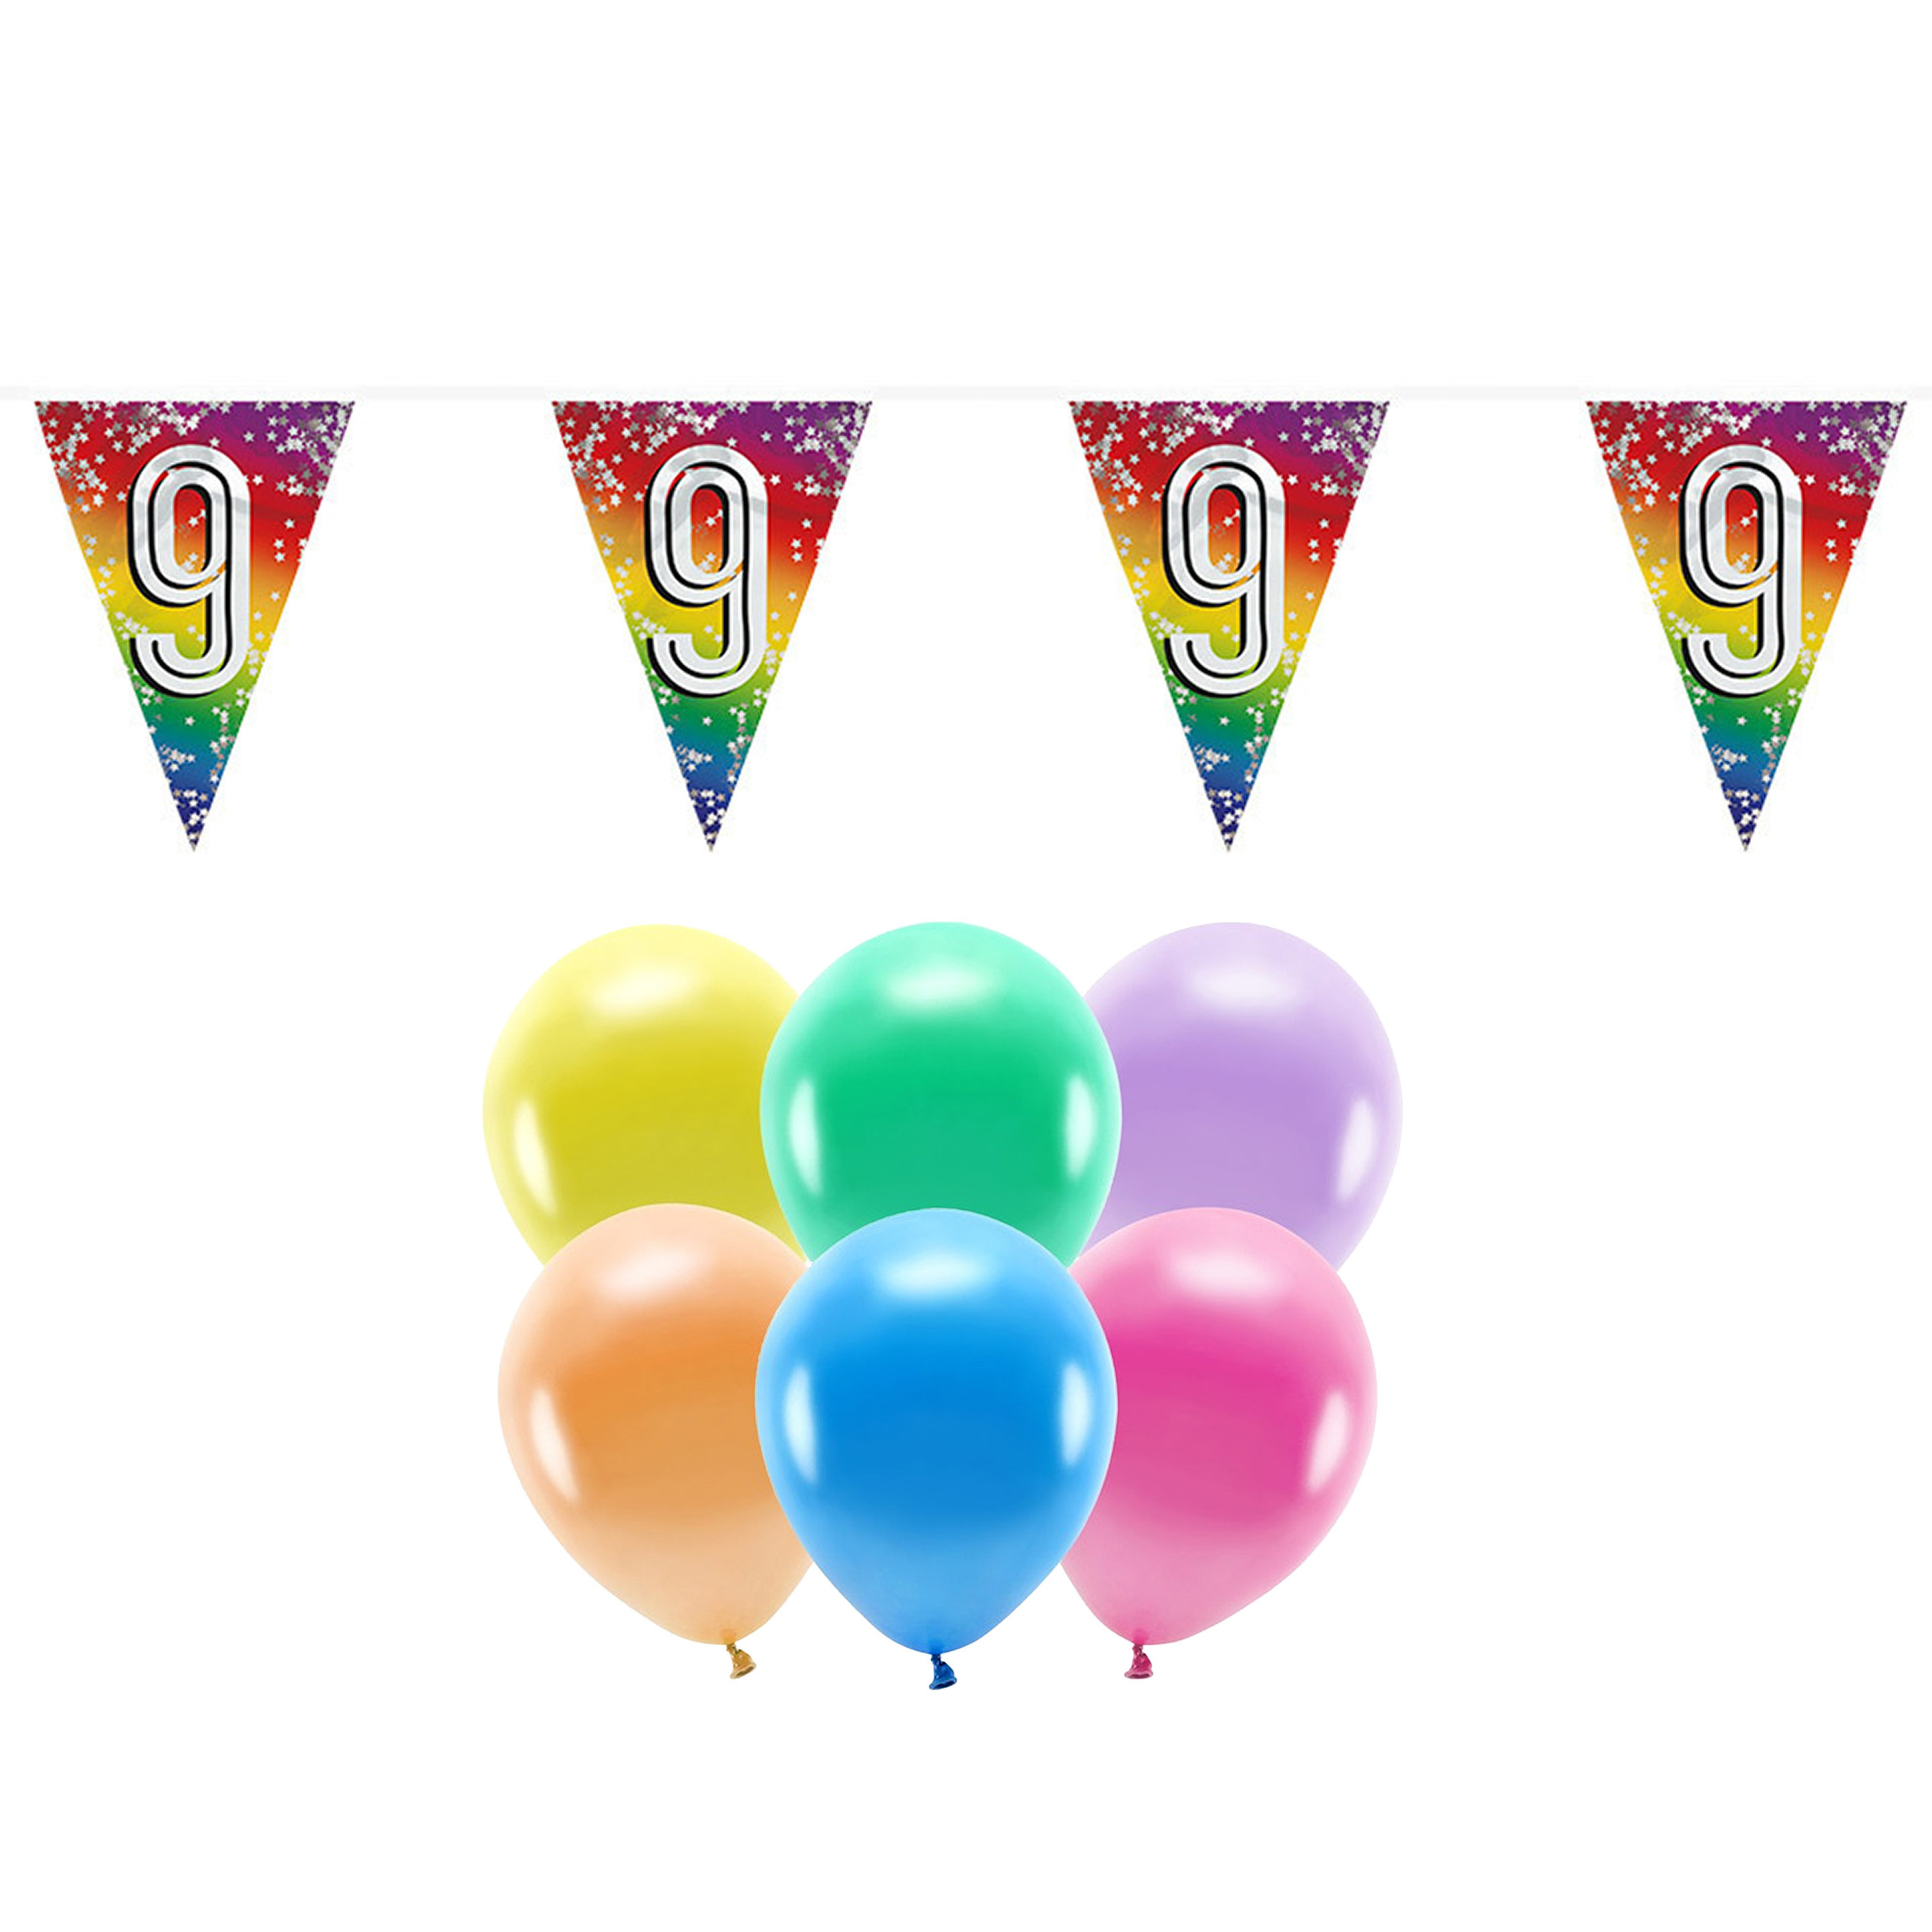 Boland Party 9e jaar verjaardag feest versieringen - Ballonnen en vlaggetjes -